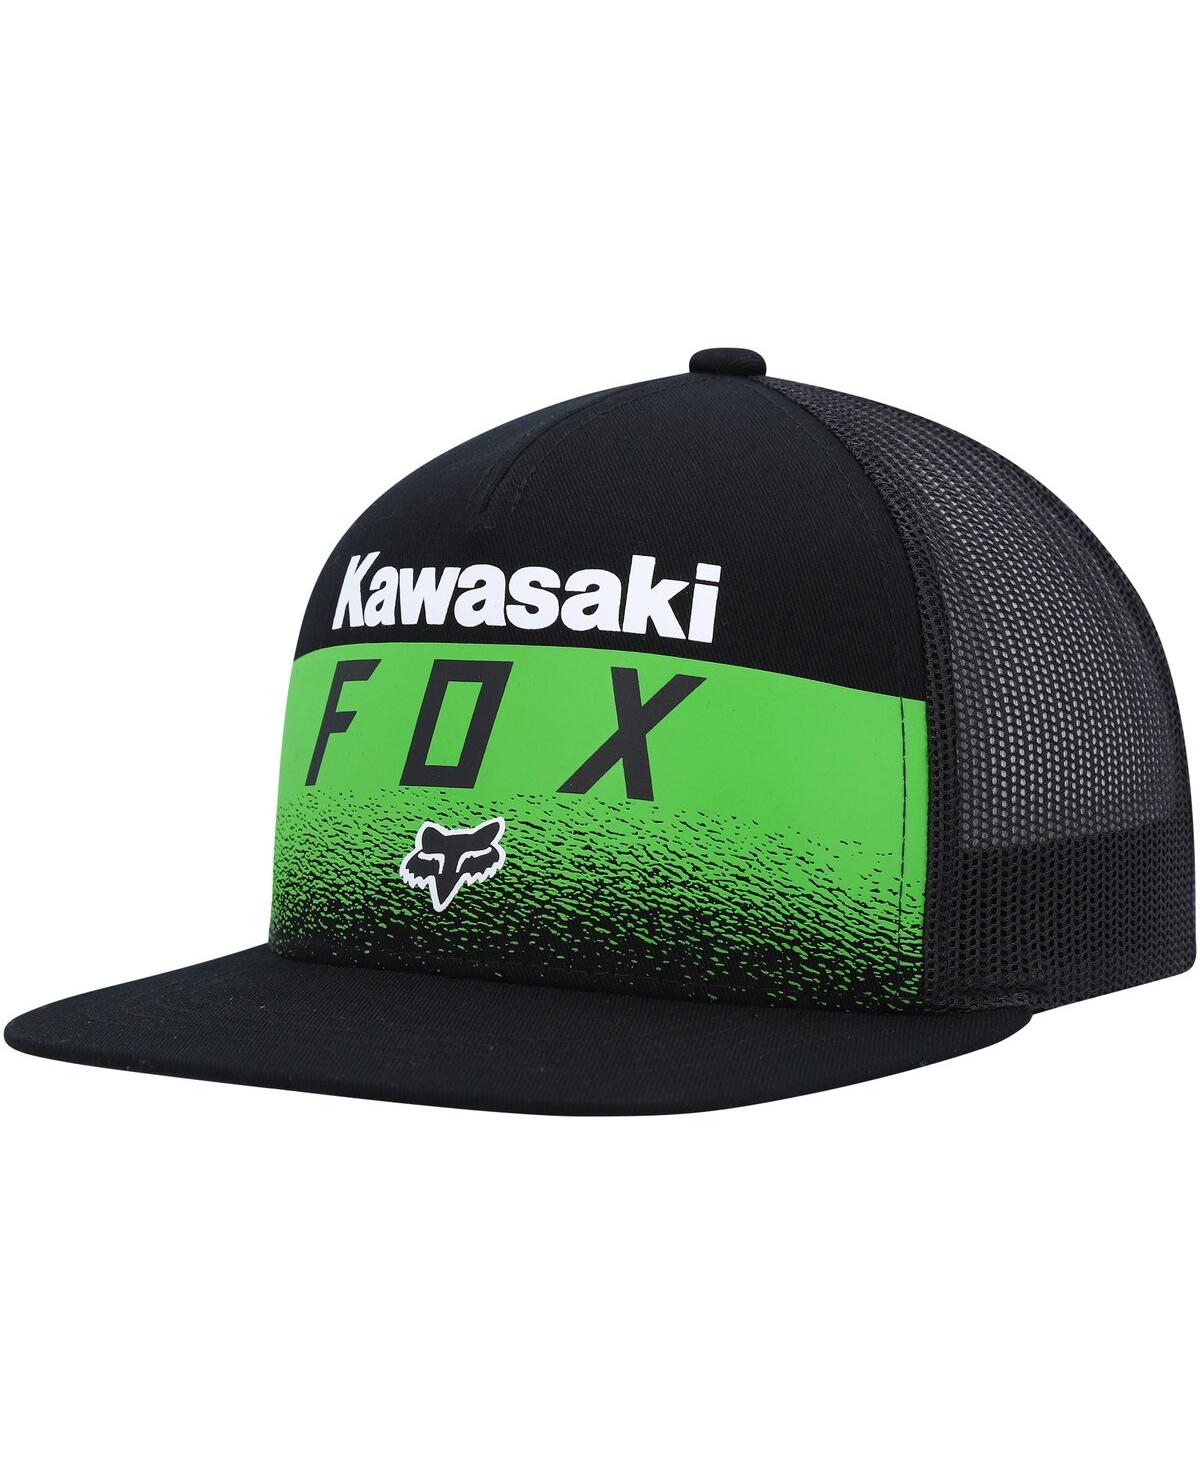 Men's Fox x Kawasaki Black Snapback Hat - Black